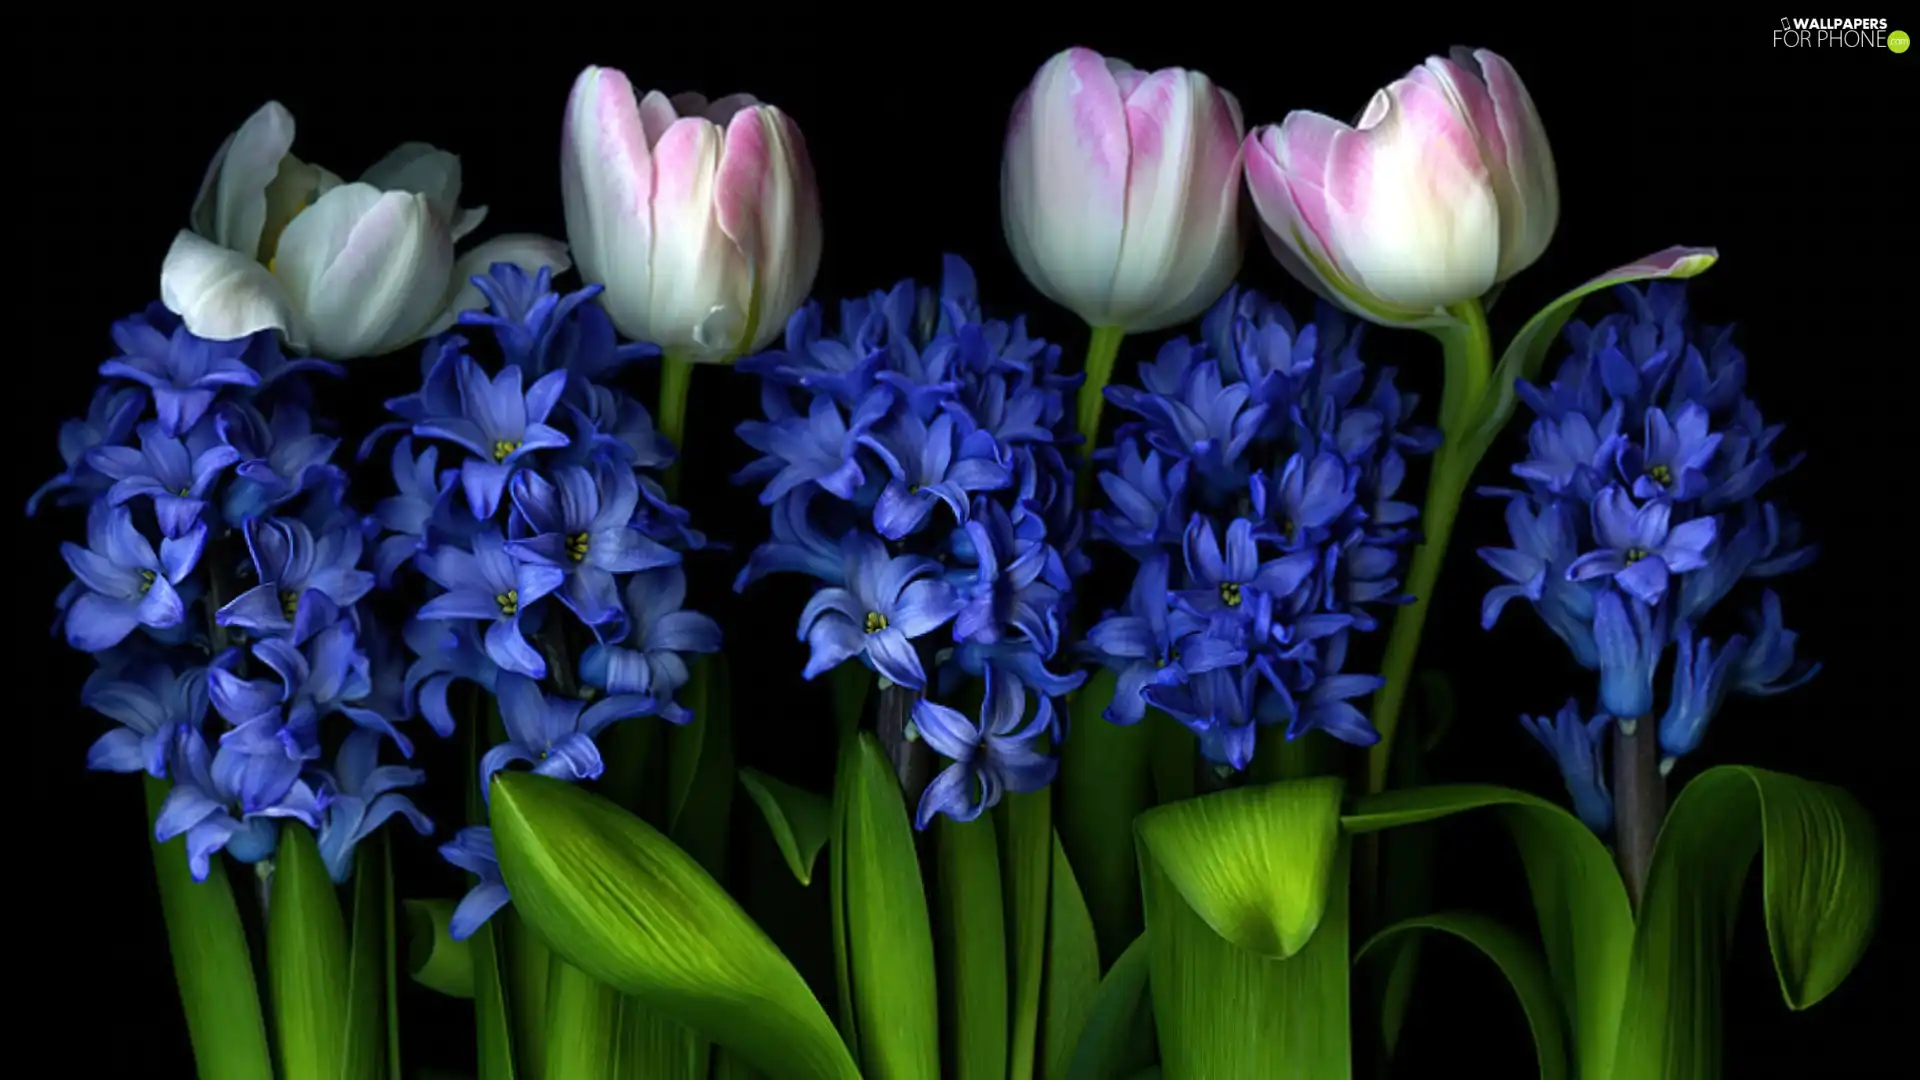 Tulips, Hyacinths